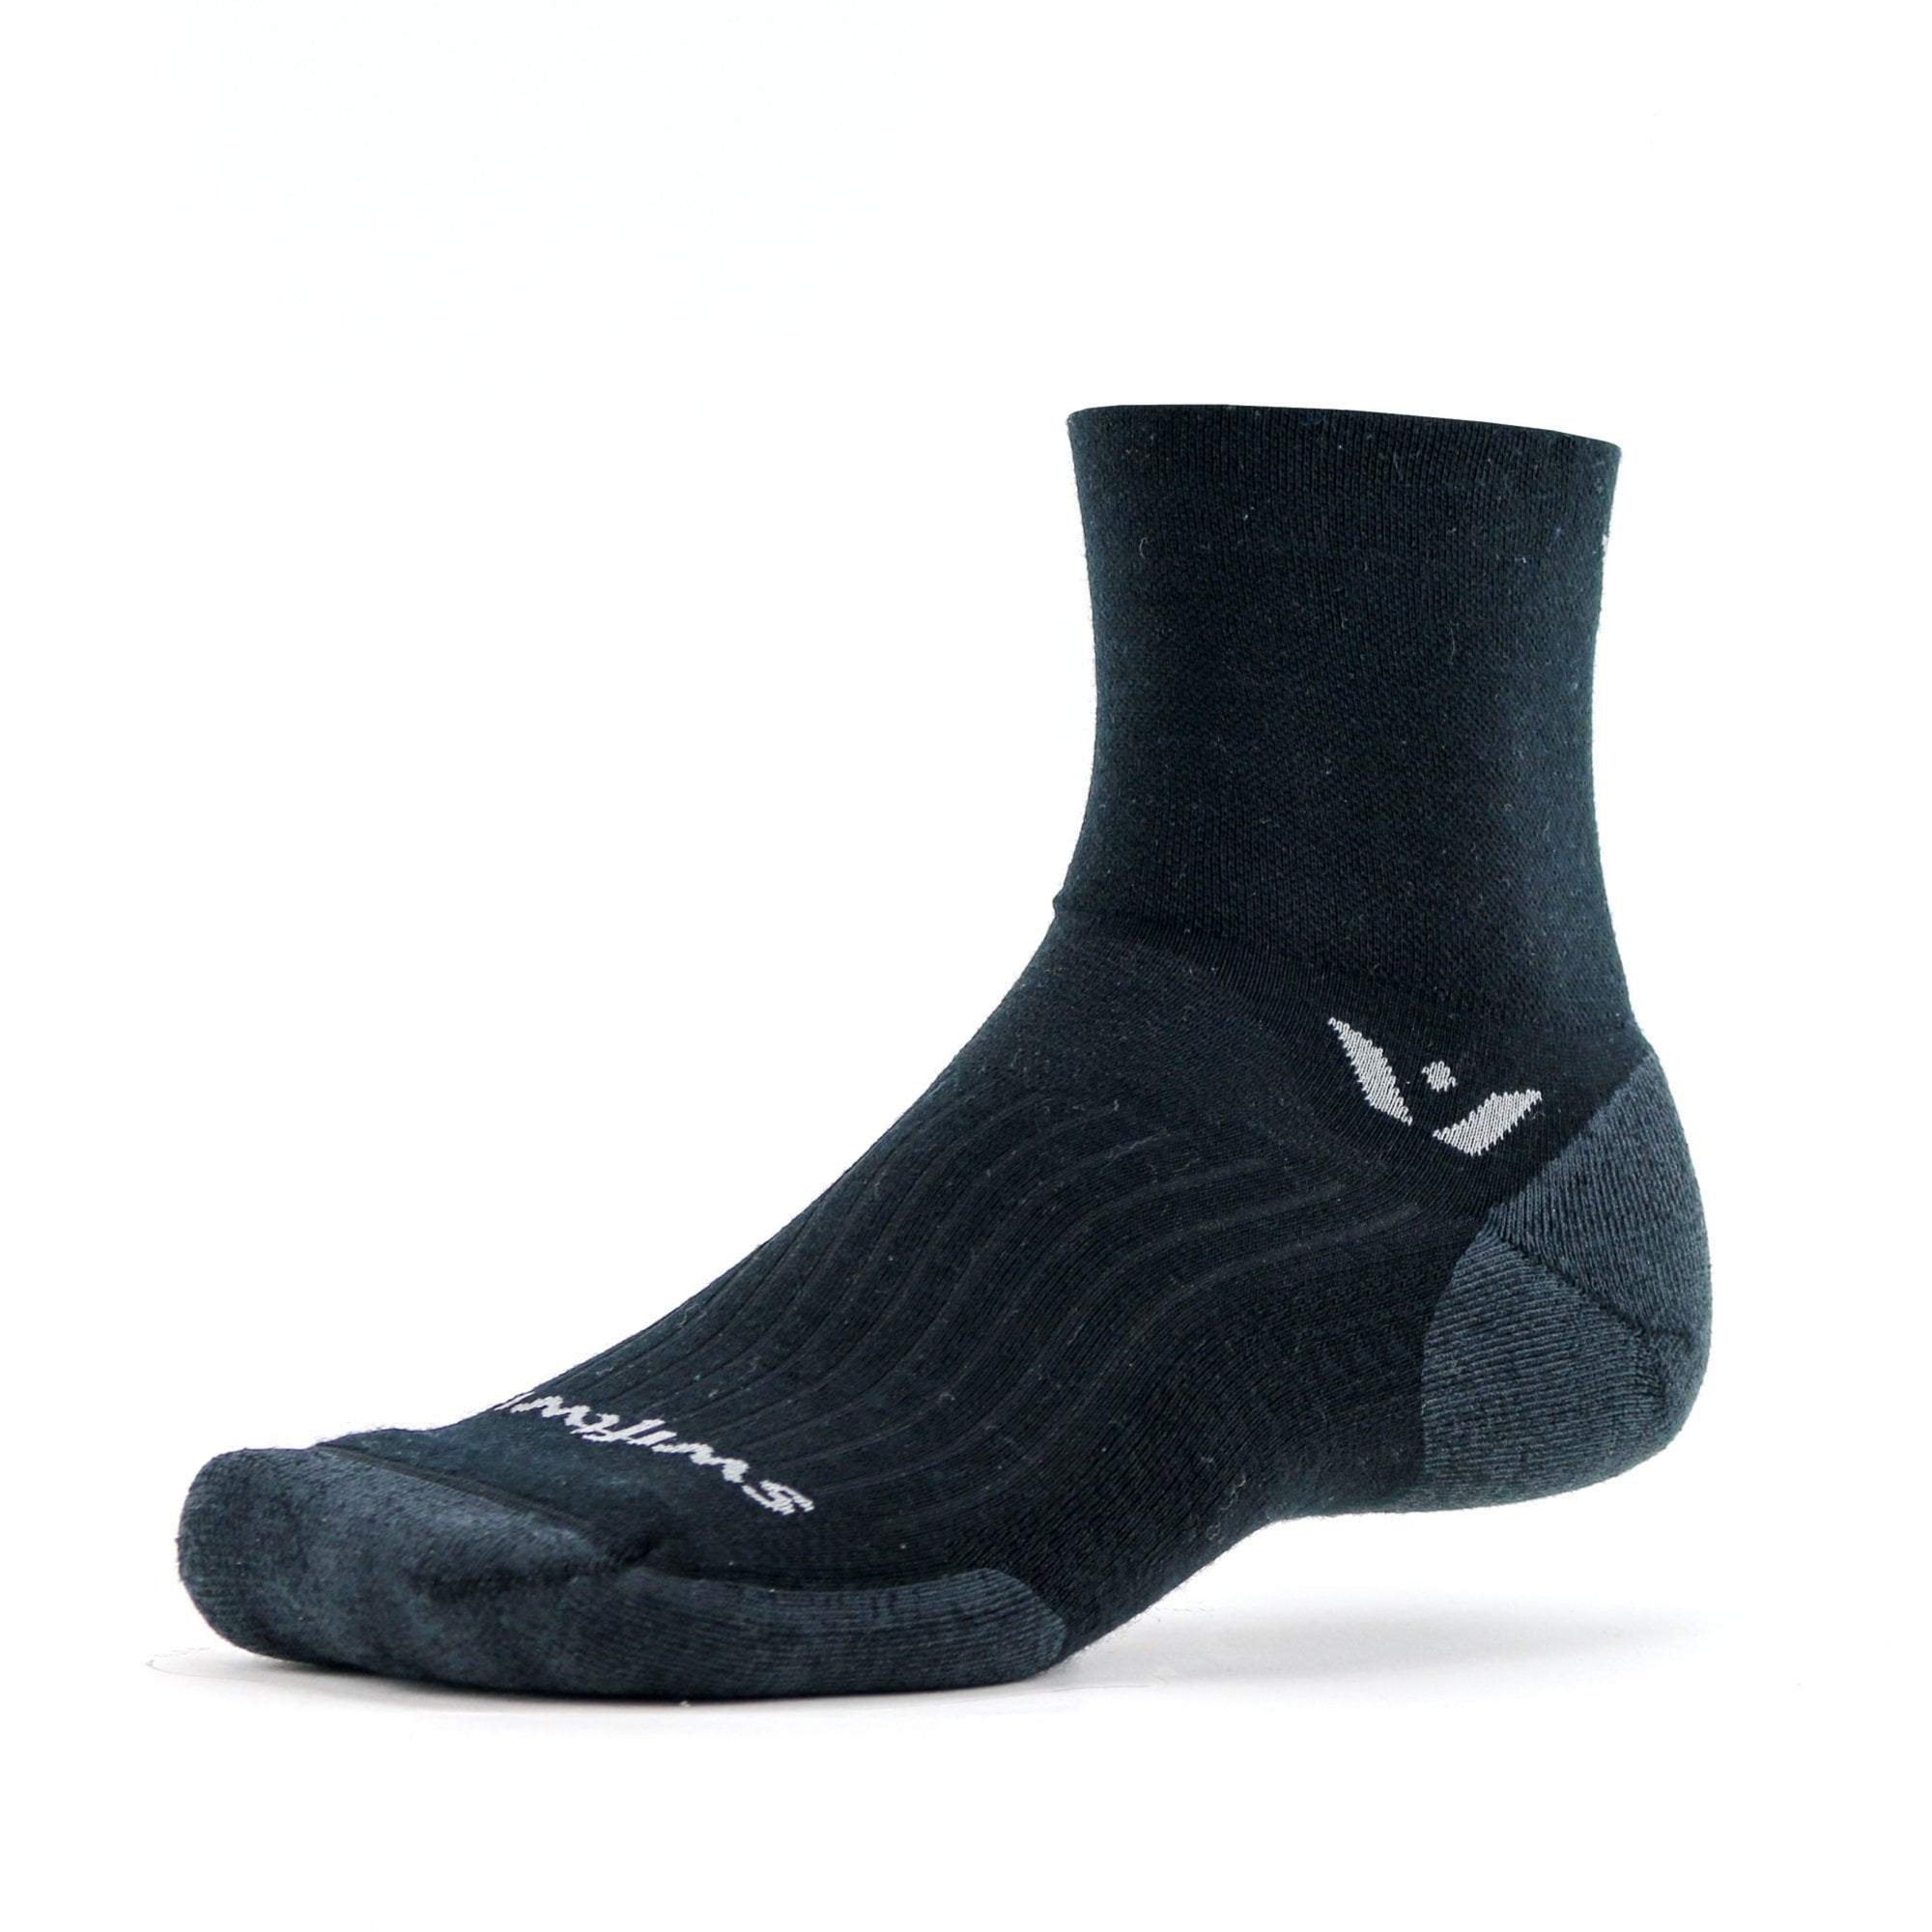 Pursuit four 2.0, 4'' sock in black